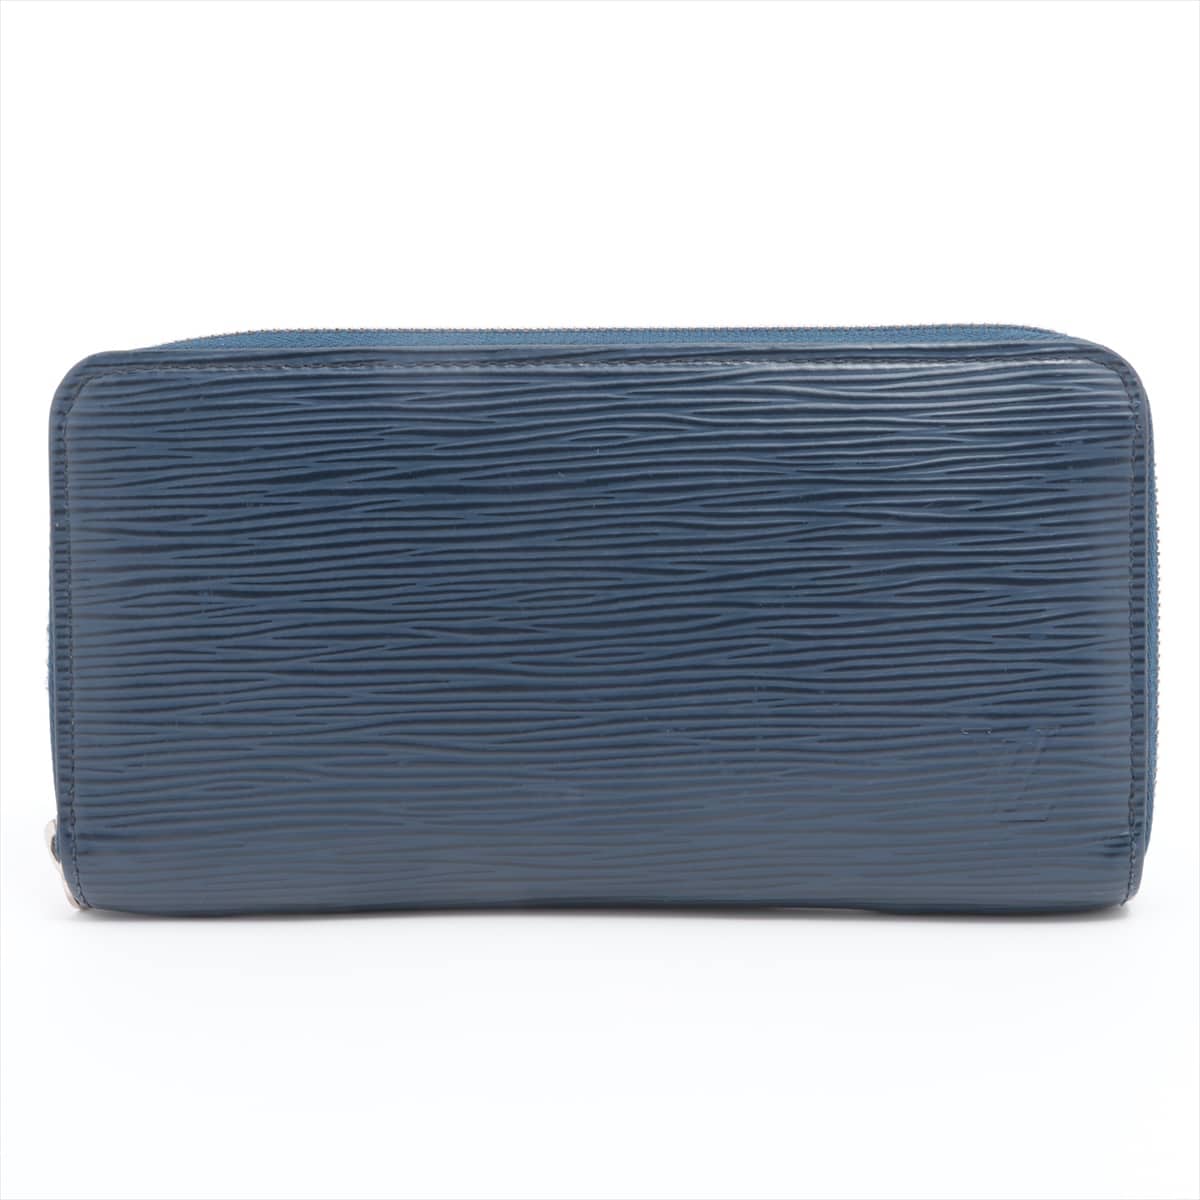 Shop Louis Vuitton Zippy coin purse (M60067) by design◇base